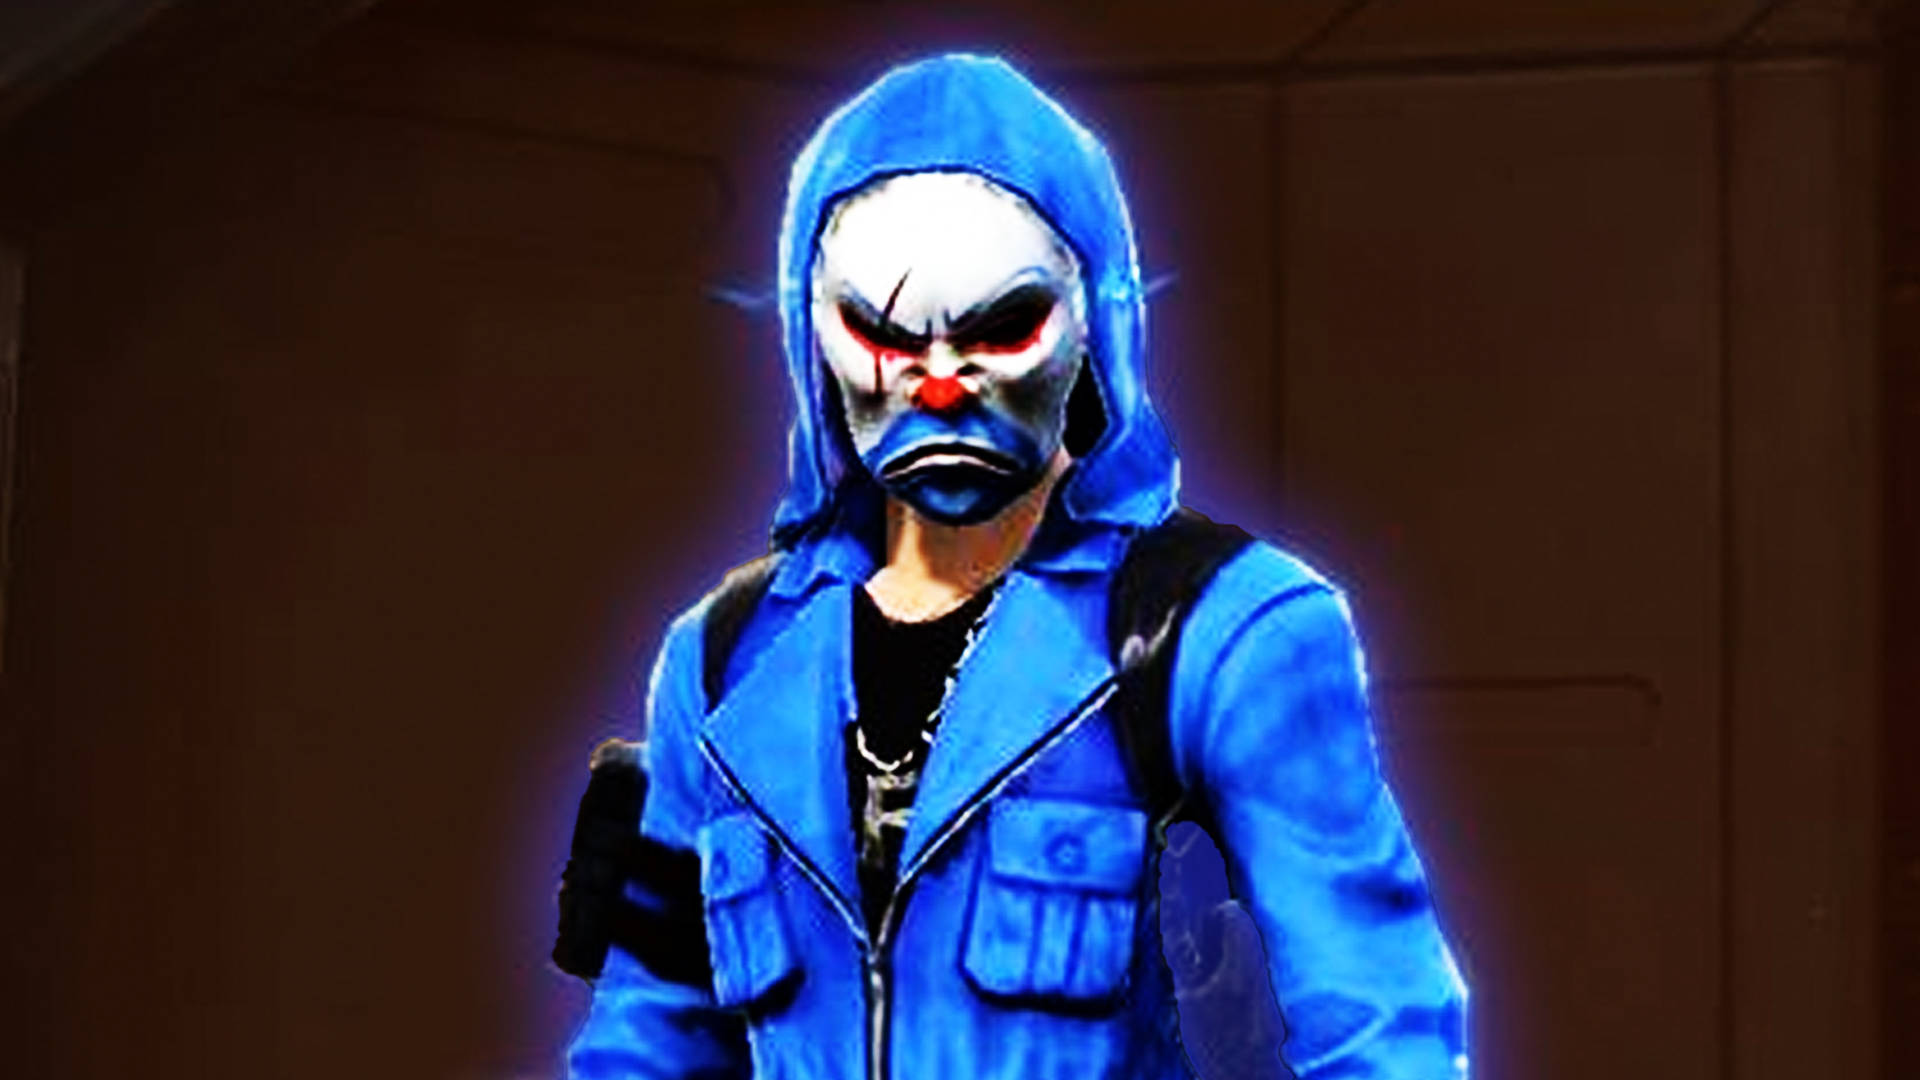 Glowing Blue Criminal Bundle Character Desktop Wallpaper